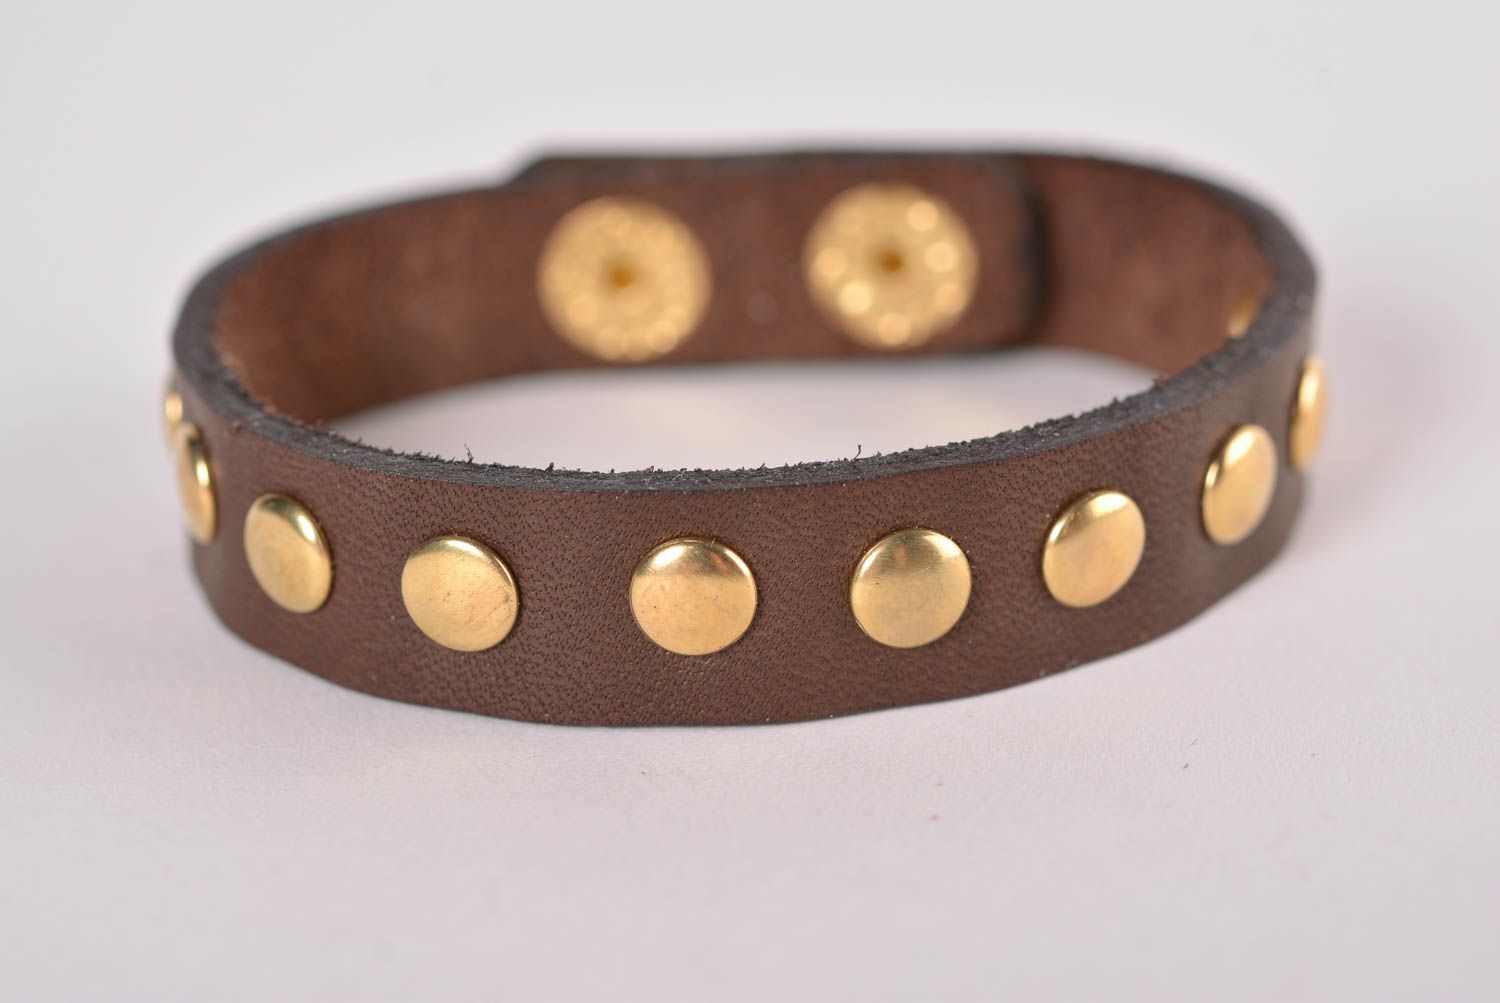 Beautiful handmade leather bracelet fashion accessories leather goods gift ideas photo 1